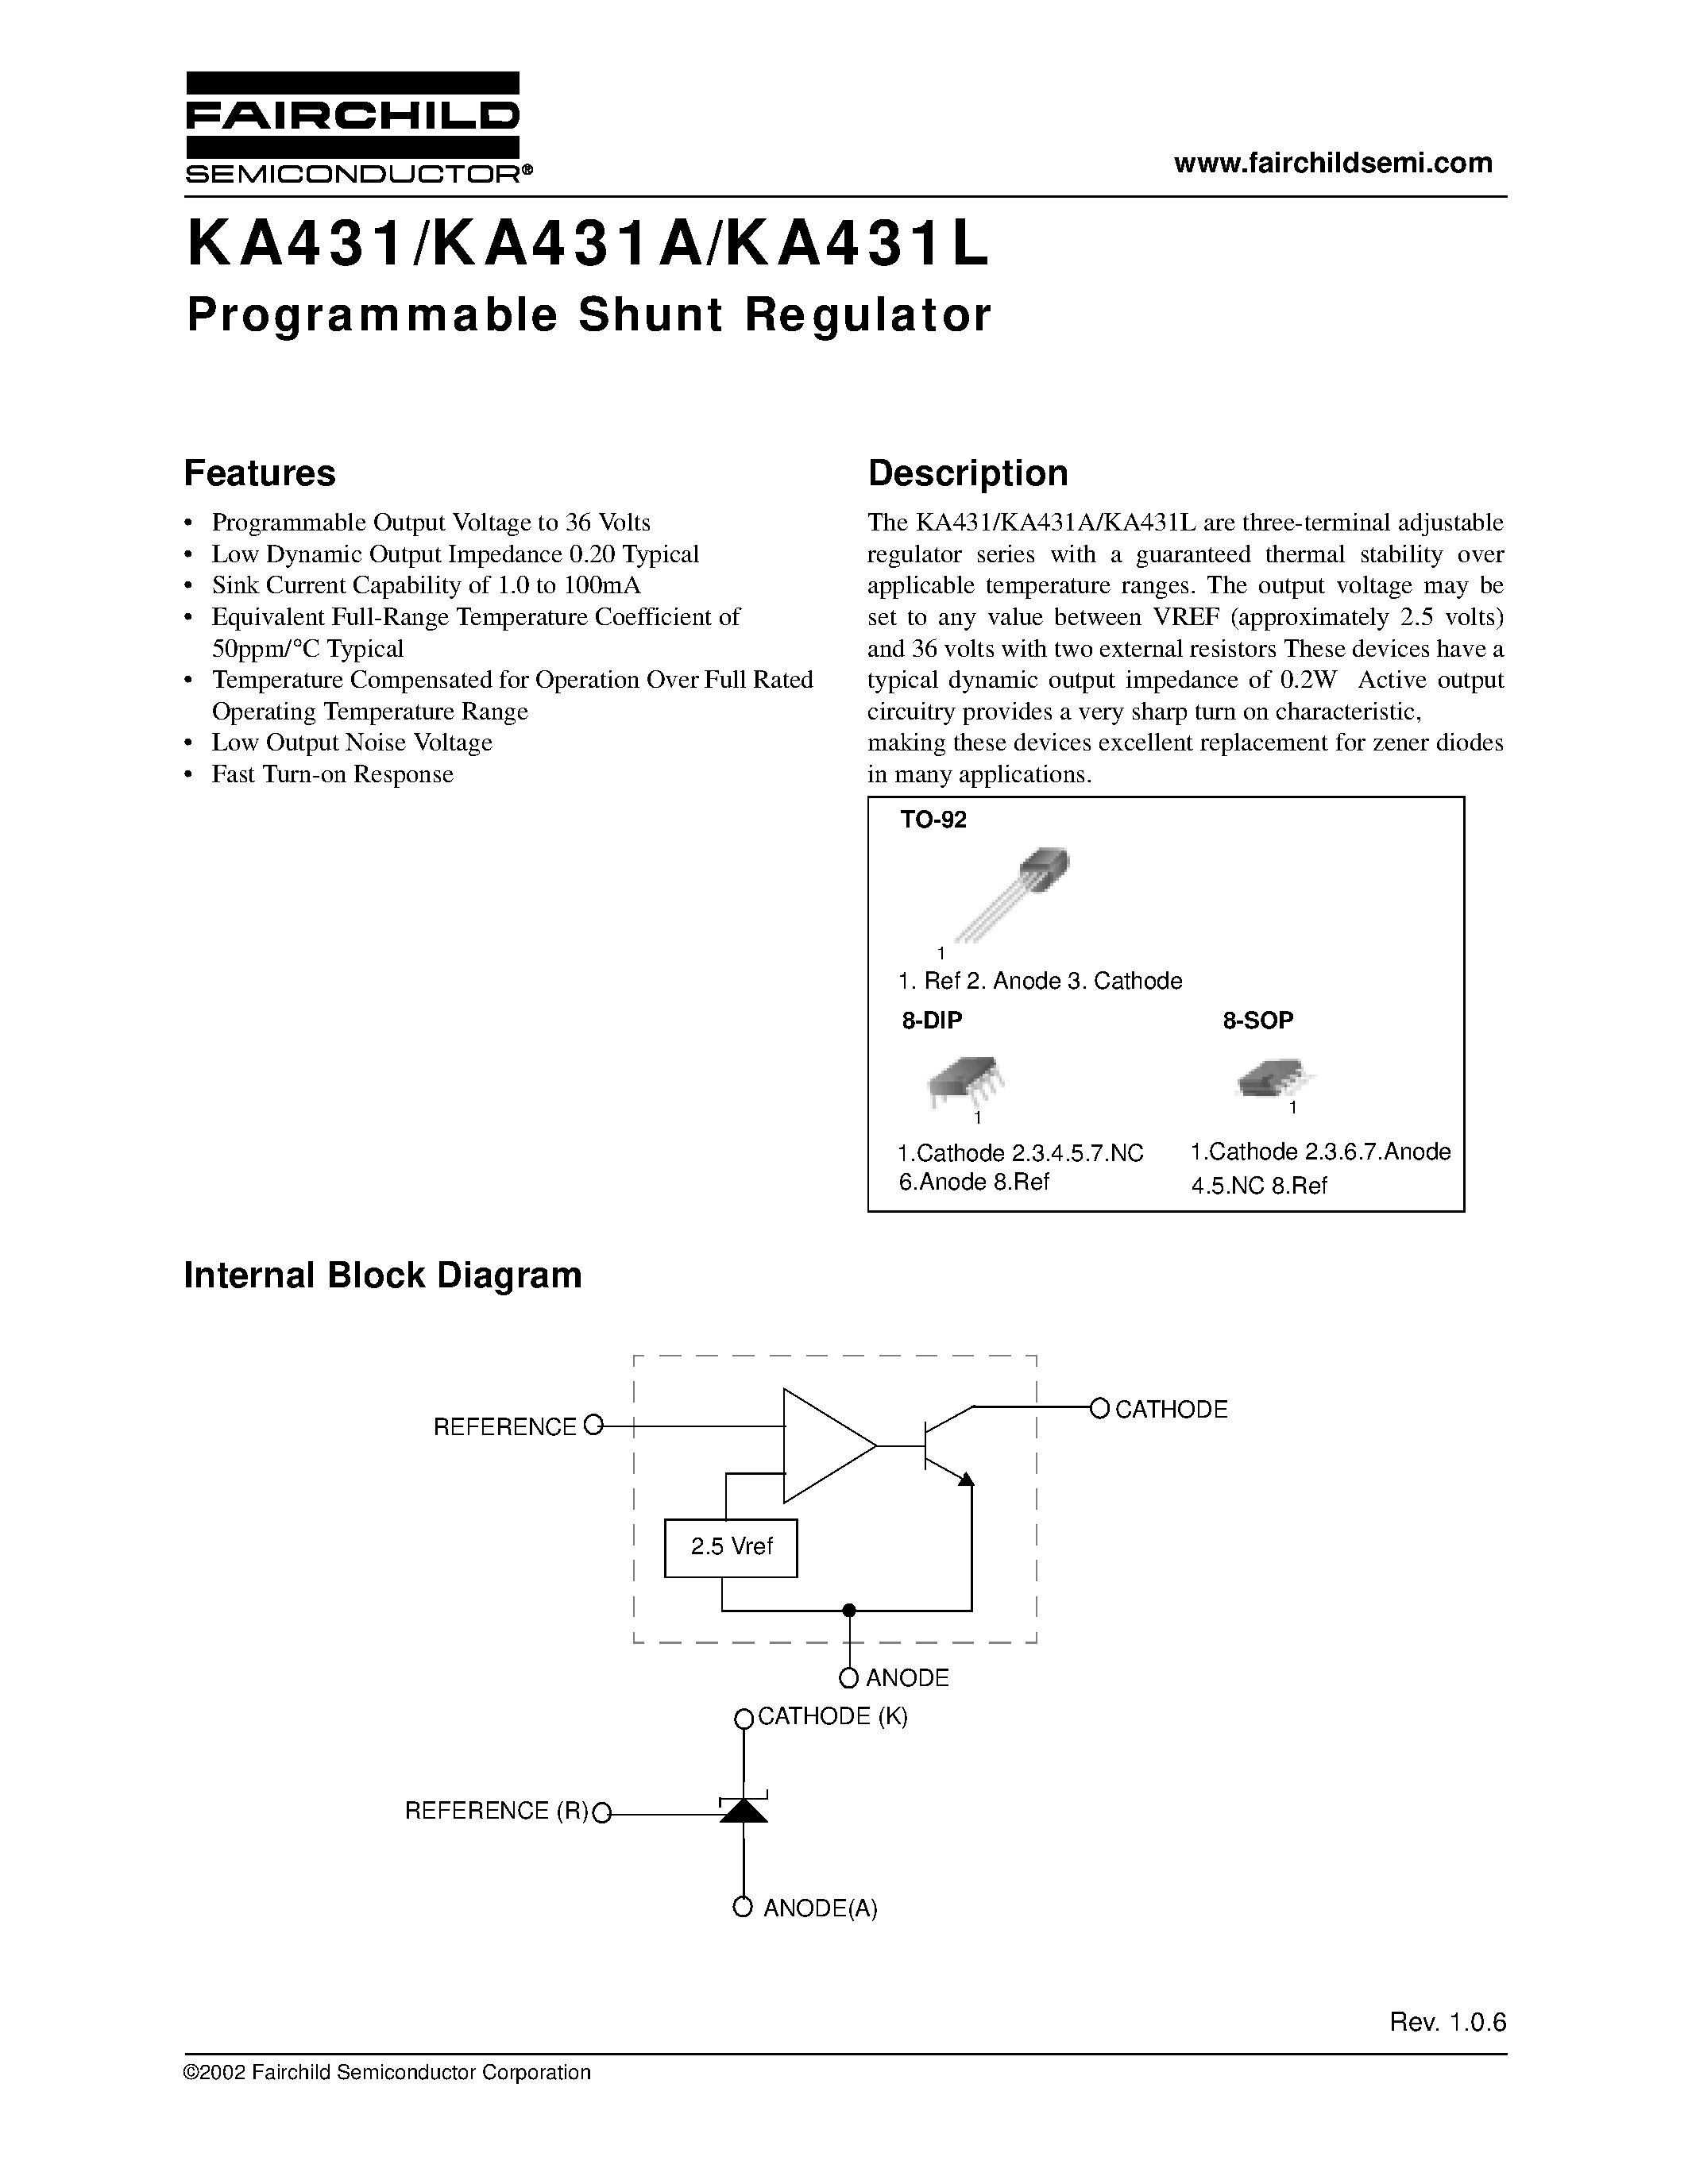 Datasheet KA431 - Programmable Shunt Regulator page 1